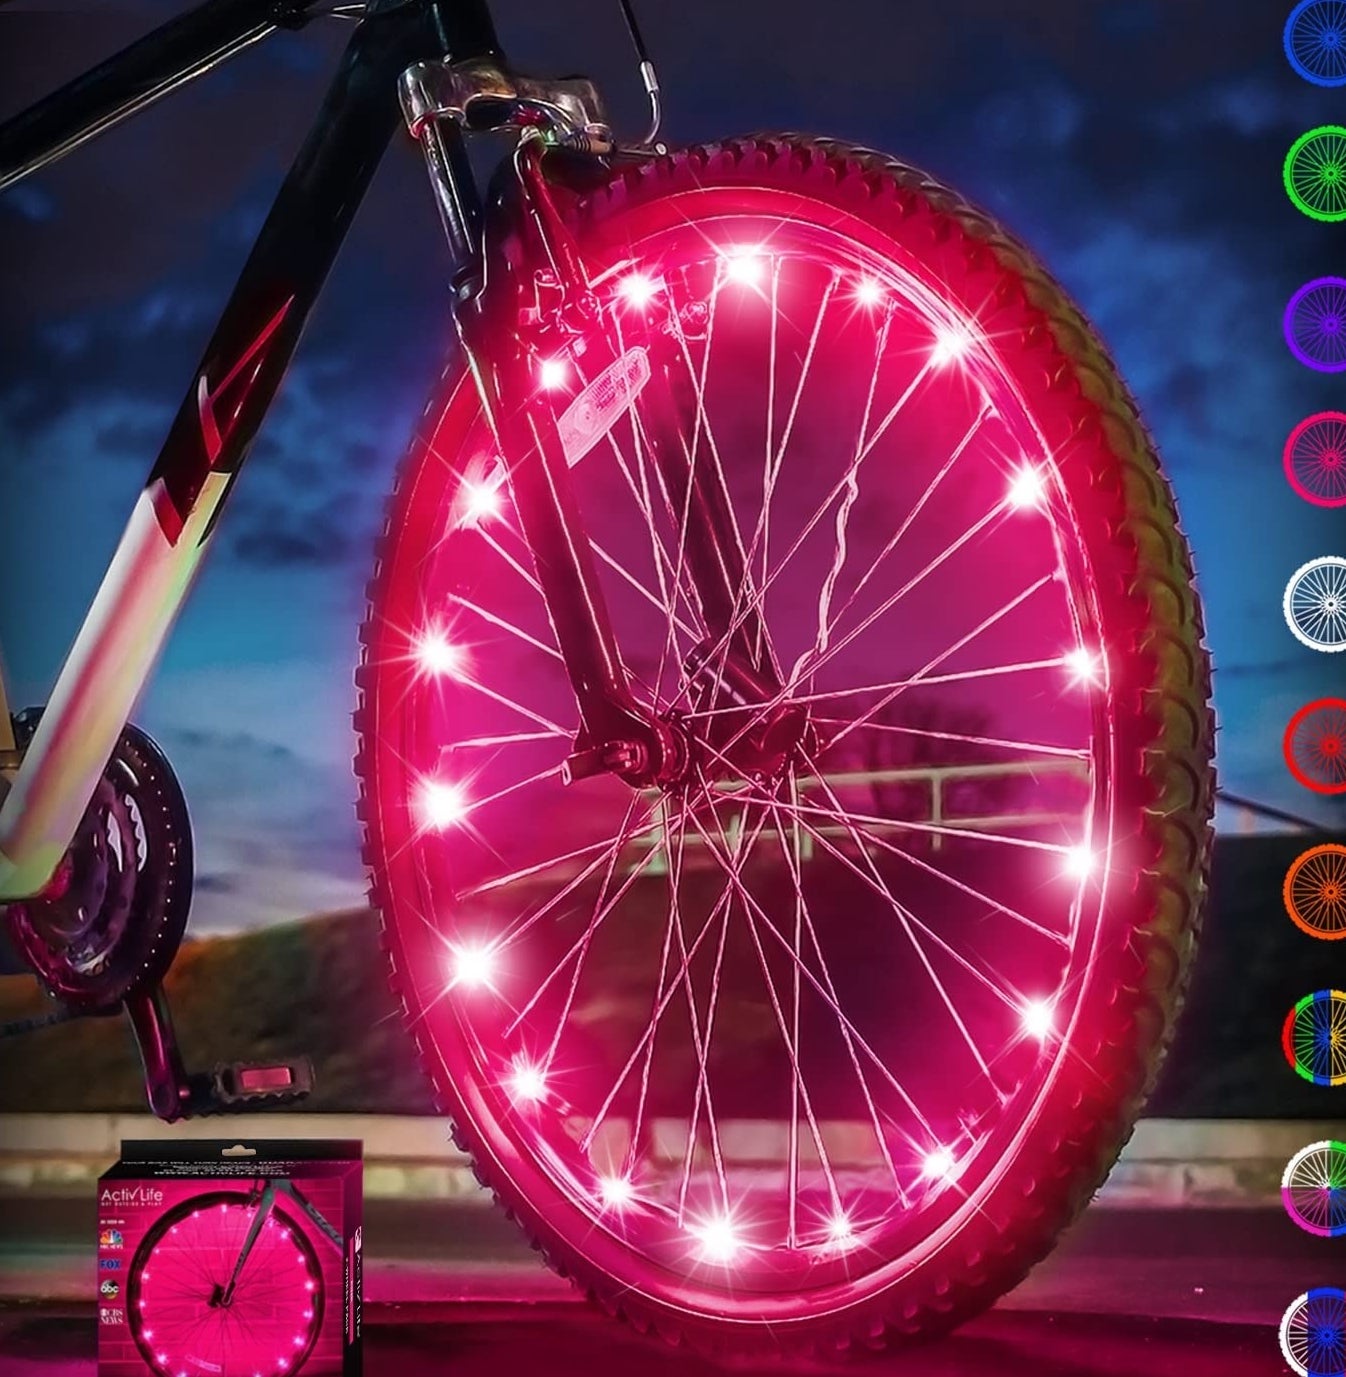 The light on the rim of a bike wheel